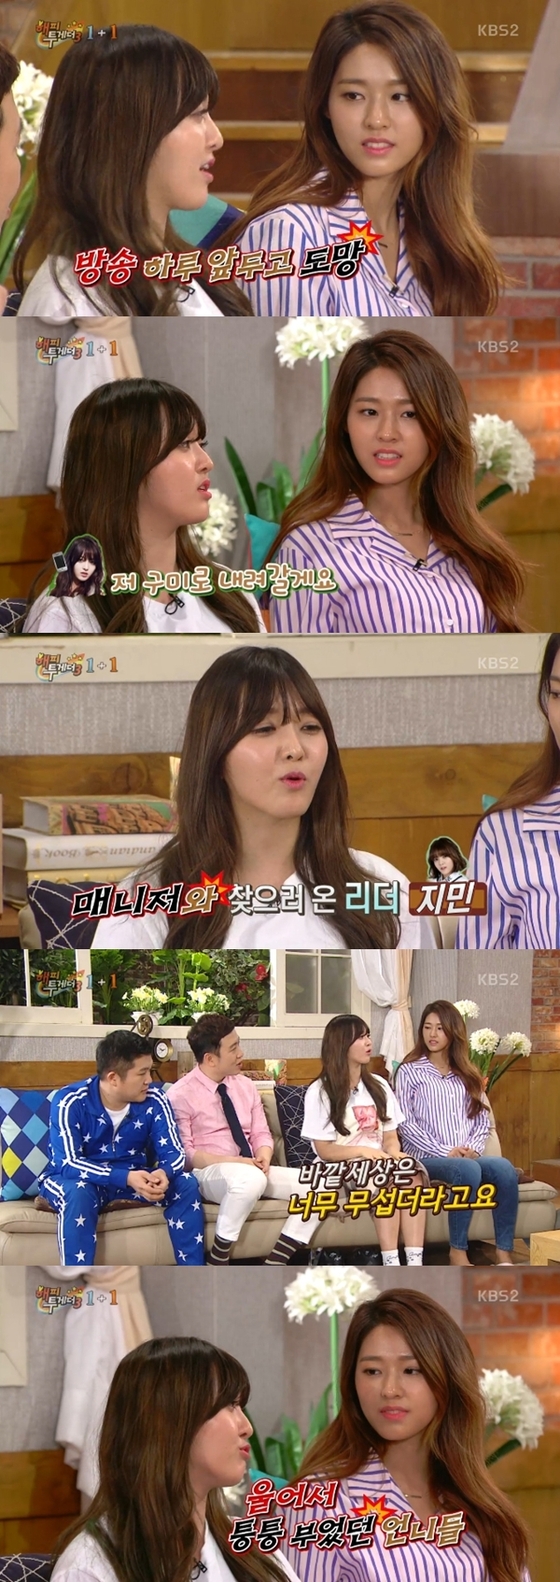 AOA 찬미가 고민 하다 도망을 갔던 경험을 밝혔다. © News1star / KBS2 '해피투게더3' 캡처